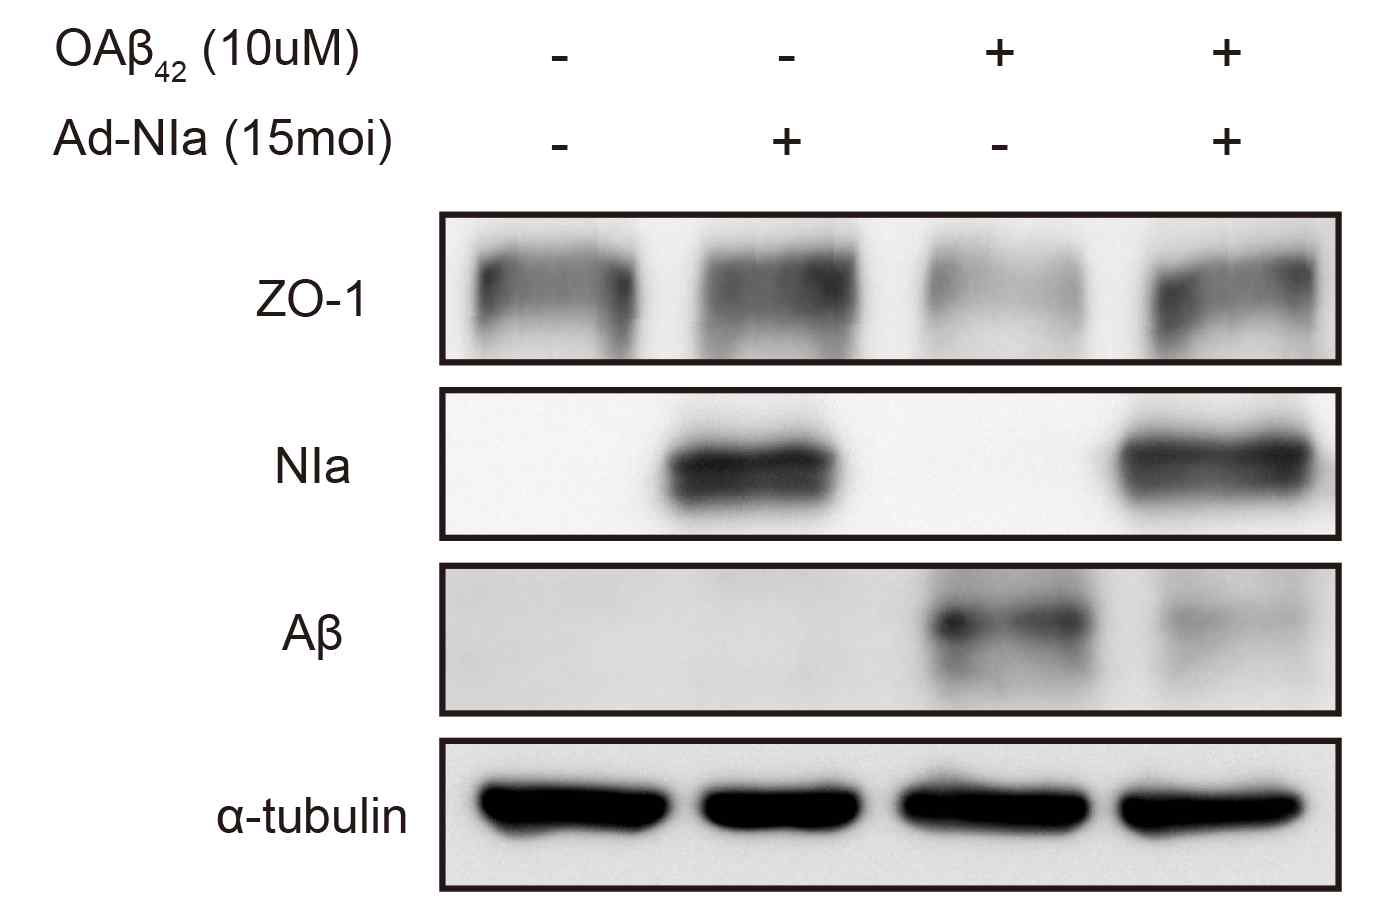 NIa의 Aβ에 의한 ARPE-19 세포 변화 저해 효과 확인 ARPE-19 세포에 15moi의 아데노 NIa 바이러스를 처리하고 24시간 후, 10μM Aβ를 처리해 24시간 뒤에 Western blot 분석법을 통해 tight junction과 세포 내 Aβ의 변화를 확인하였다. Aβ만 처리한 세 번째 레인에서는 tight junction marker인 ZO-1이 감소하였으나, 아데노 NIa 바이러스를 미리 처리해 준 네 번째 레인에서는 ZO-1이 대조군(첫 번째 레인)과 비슷한 정도로 유지됨을 확인하였다. 아데노 NIa 바이러스를 미리 처리해 준 경우(네 번째 레인), 그렇지 않은 경우(세 번째 레인)에 비하여 세포 내 Aβ가 감소함을 확인하였다